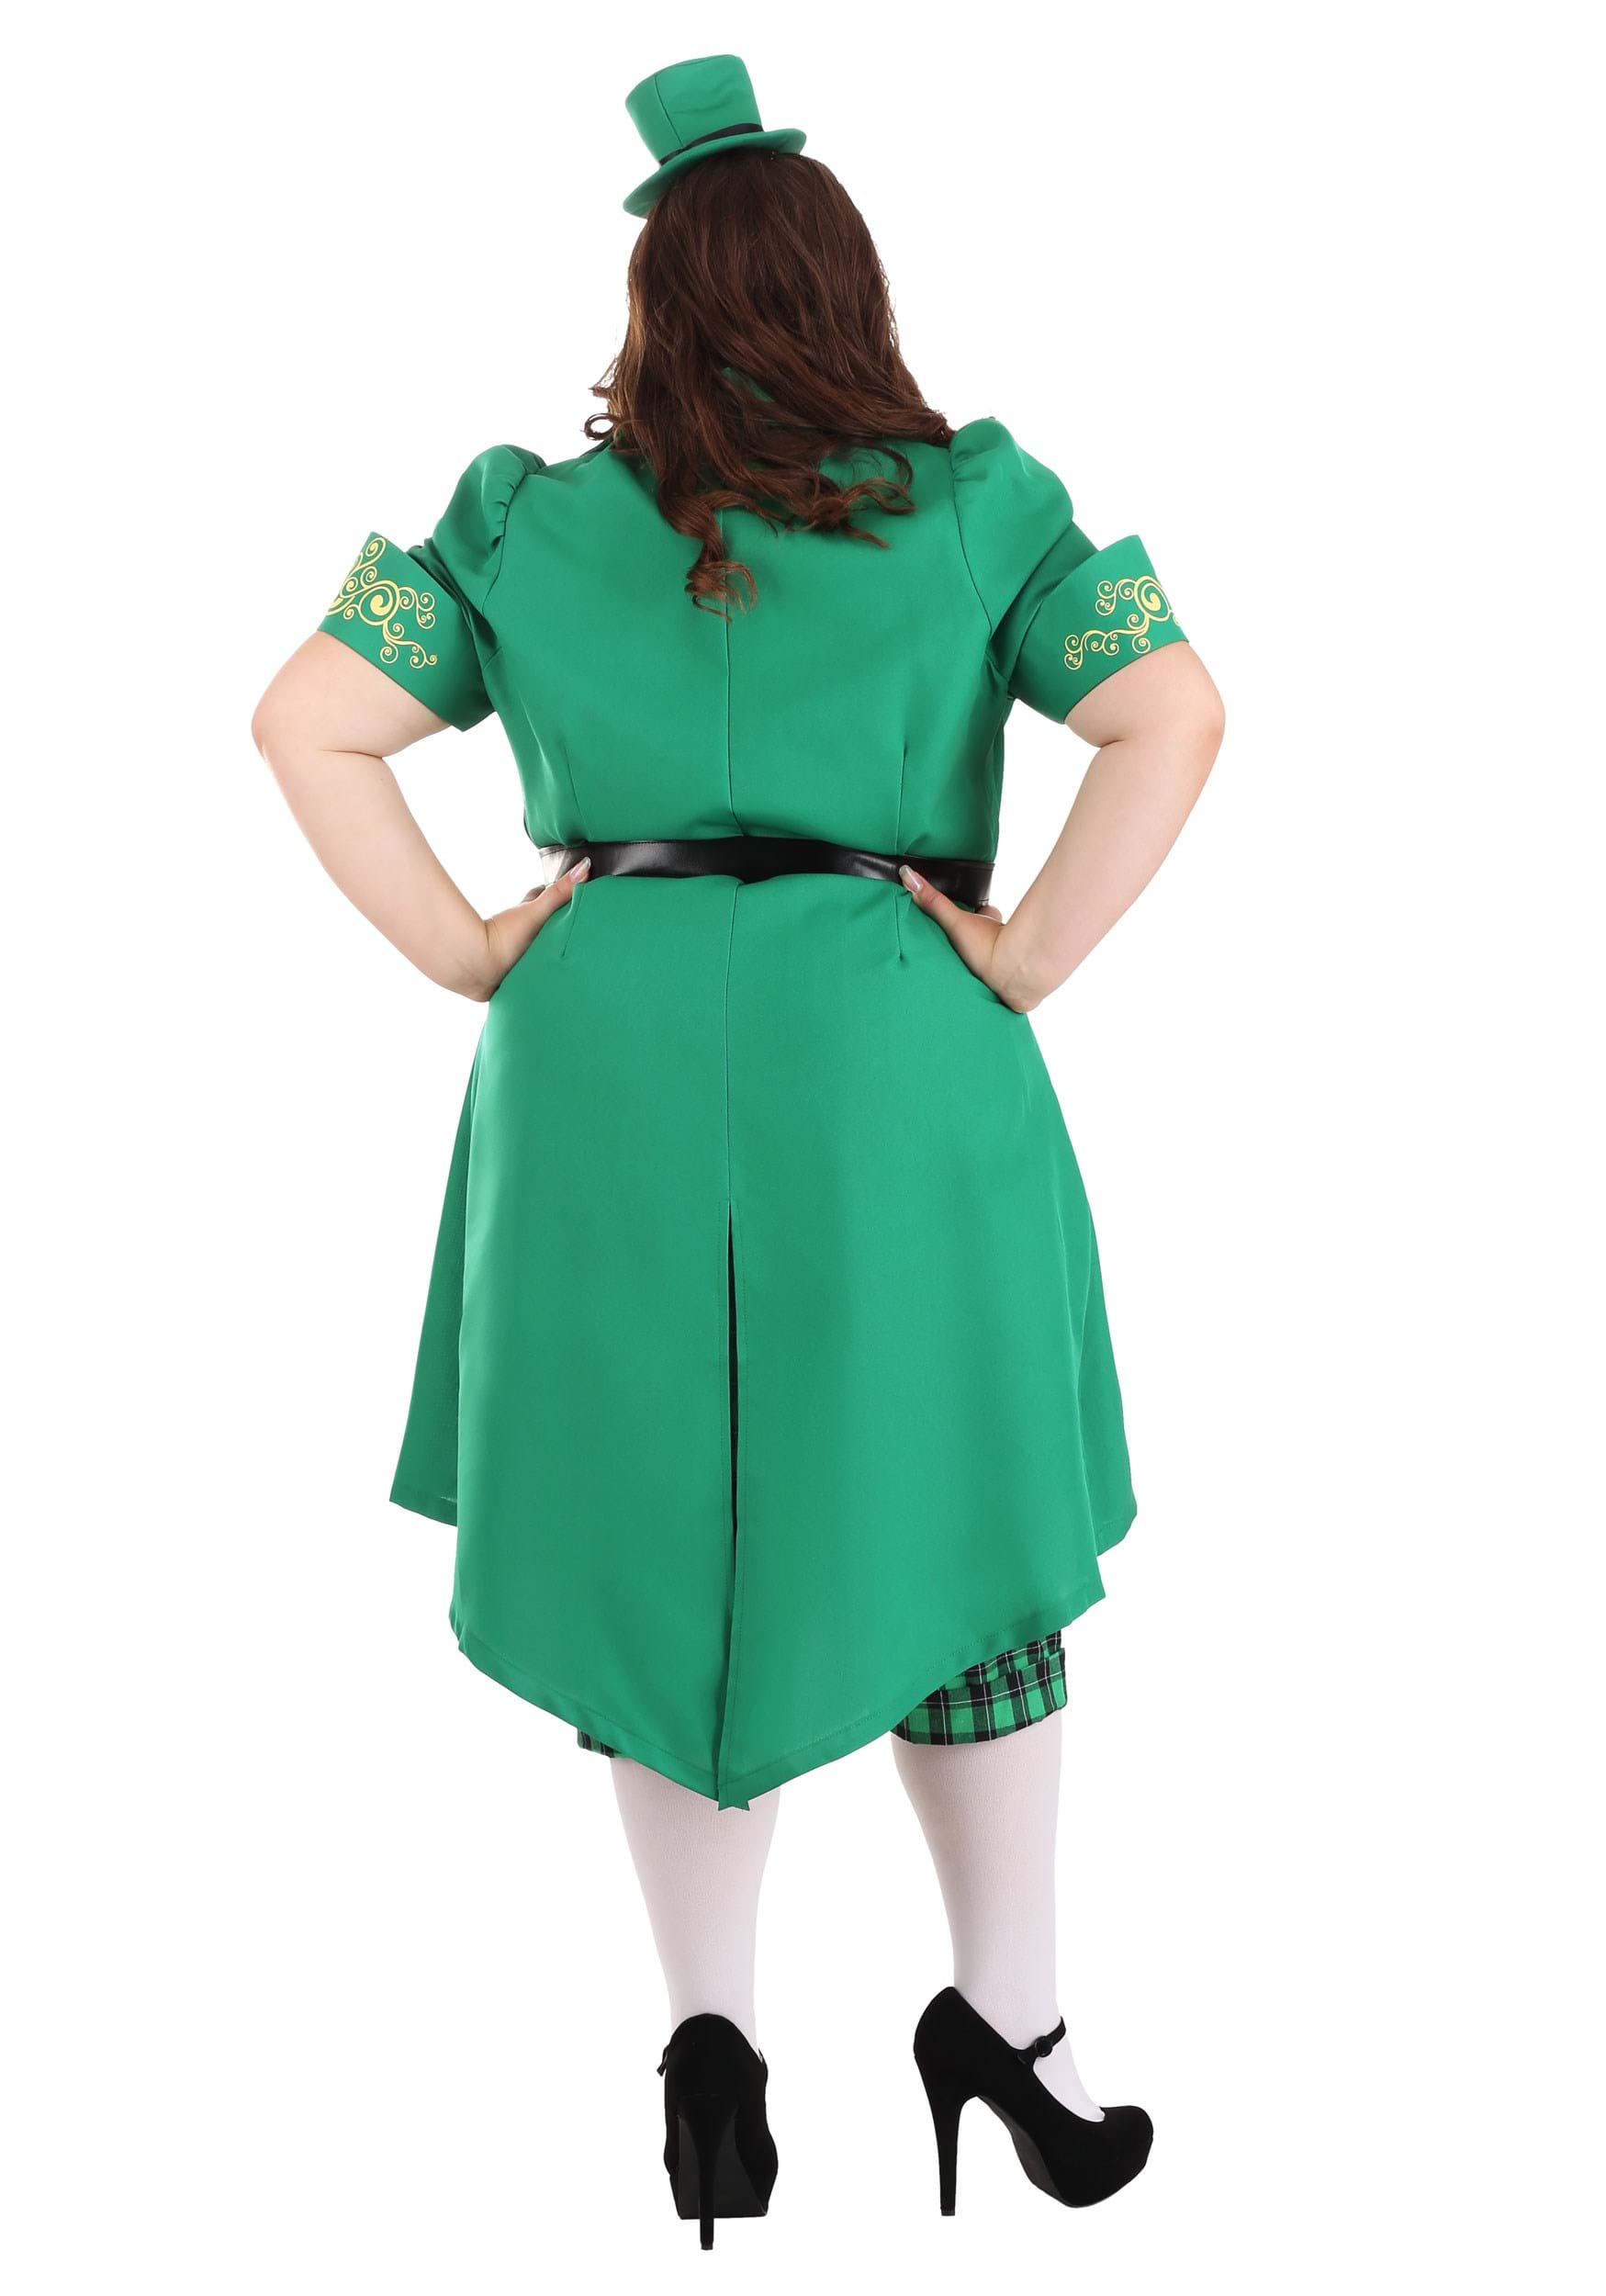 Plus Size Charming Leprechaun Costume For Women